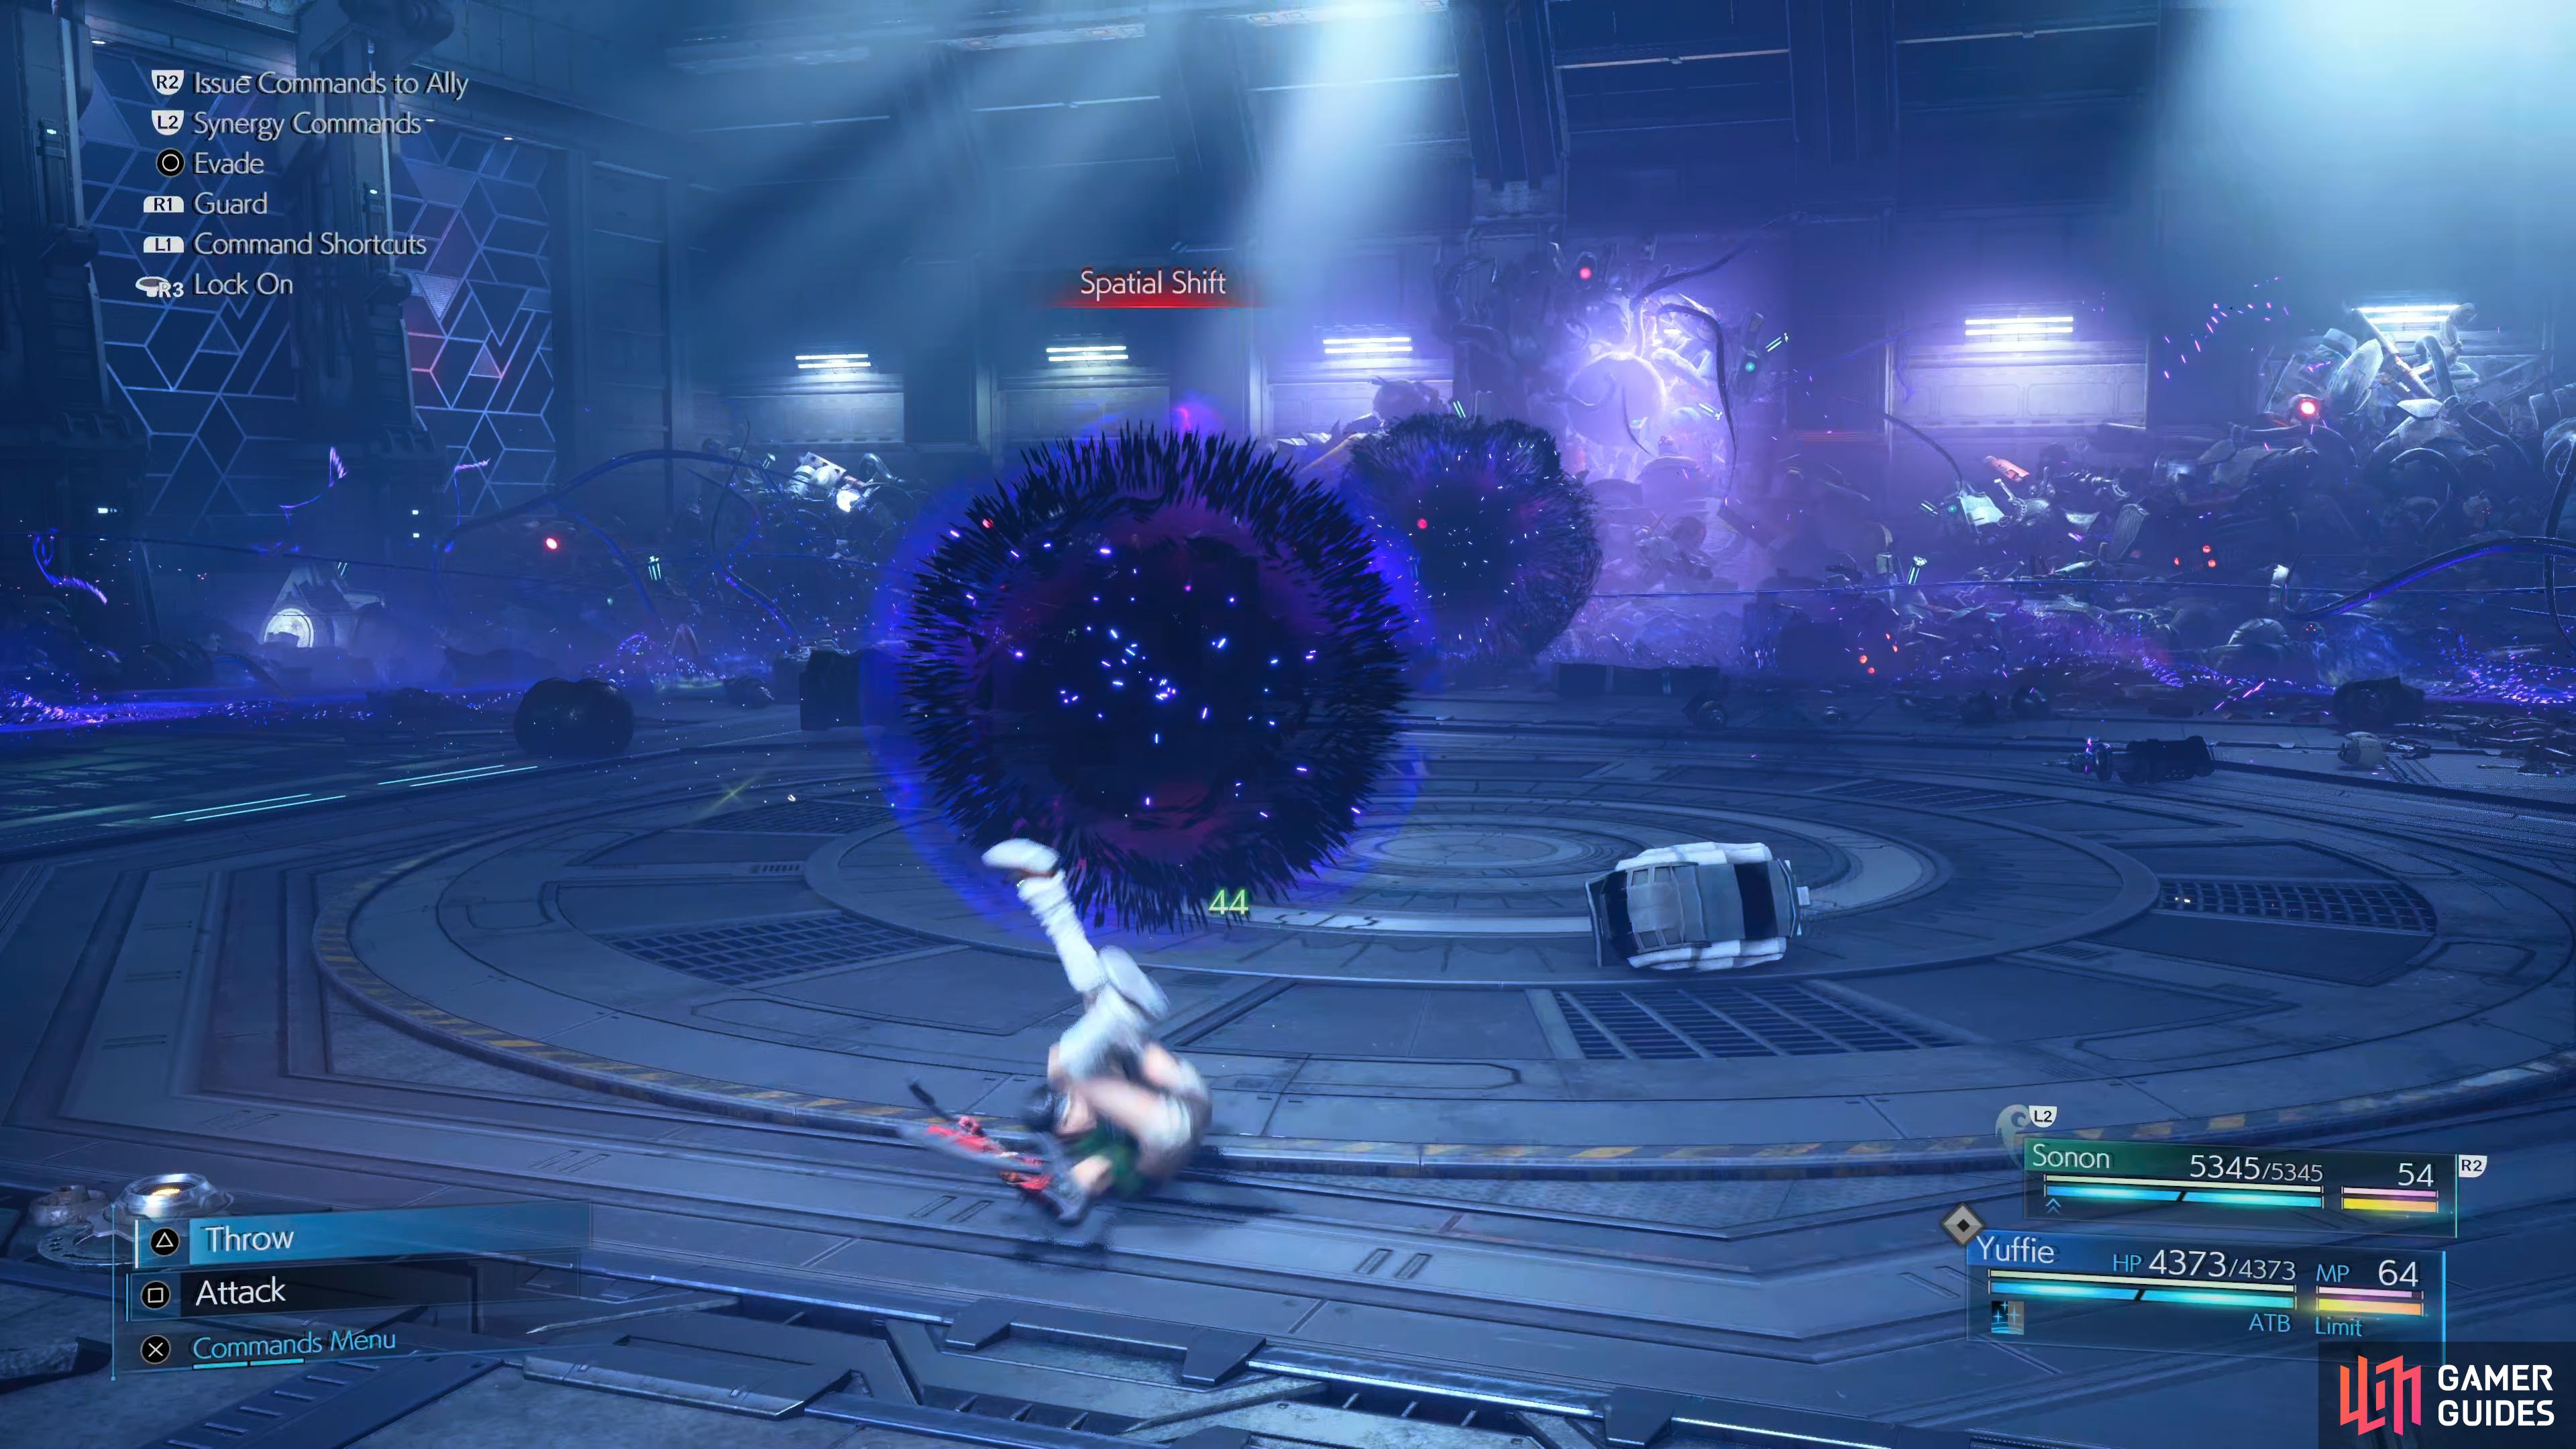 Spatial Shift will allow Nero to warp around the arena